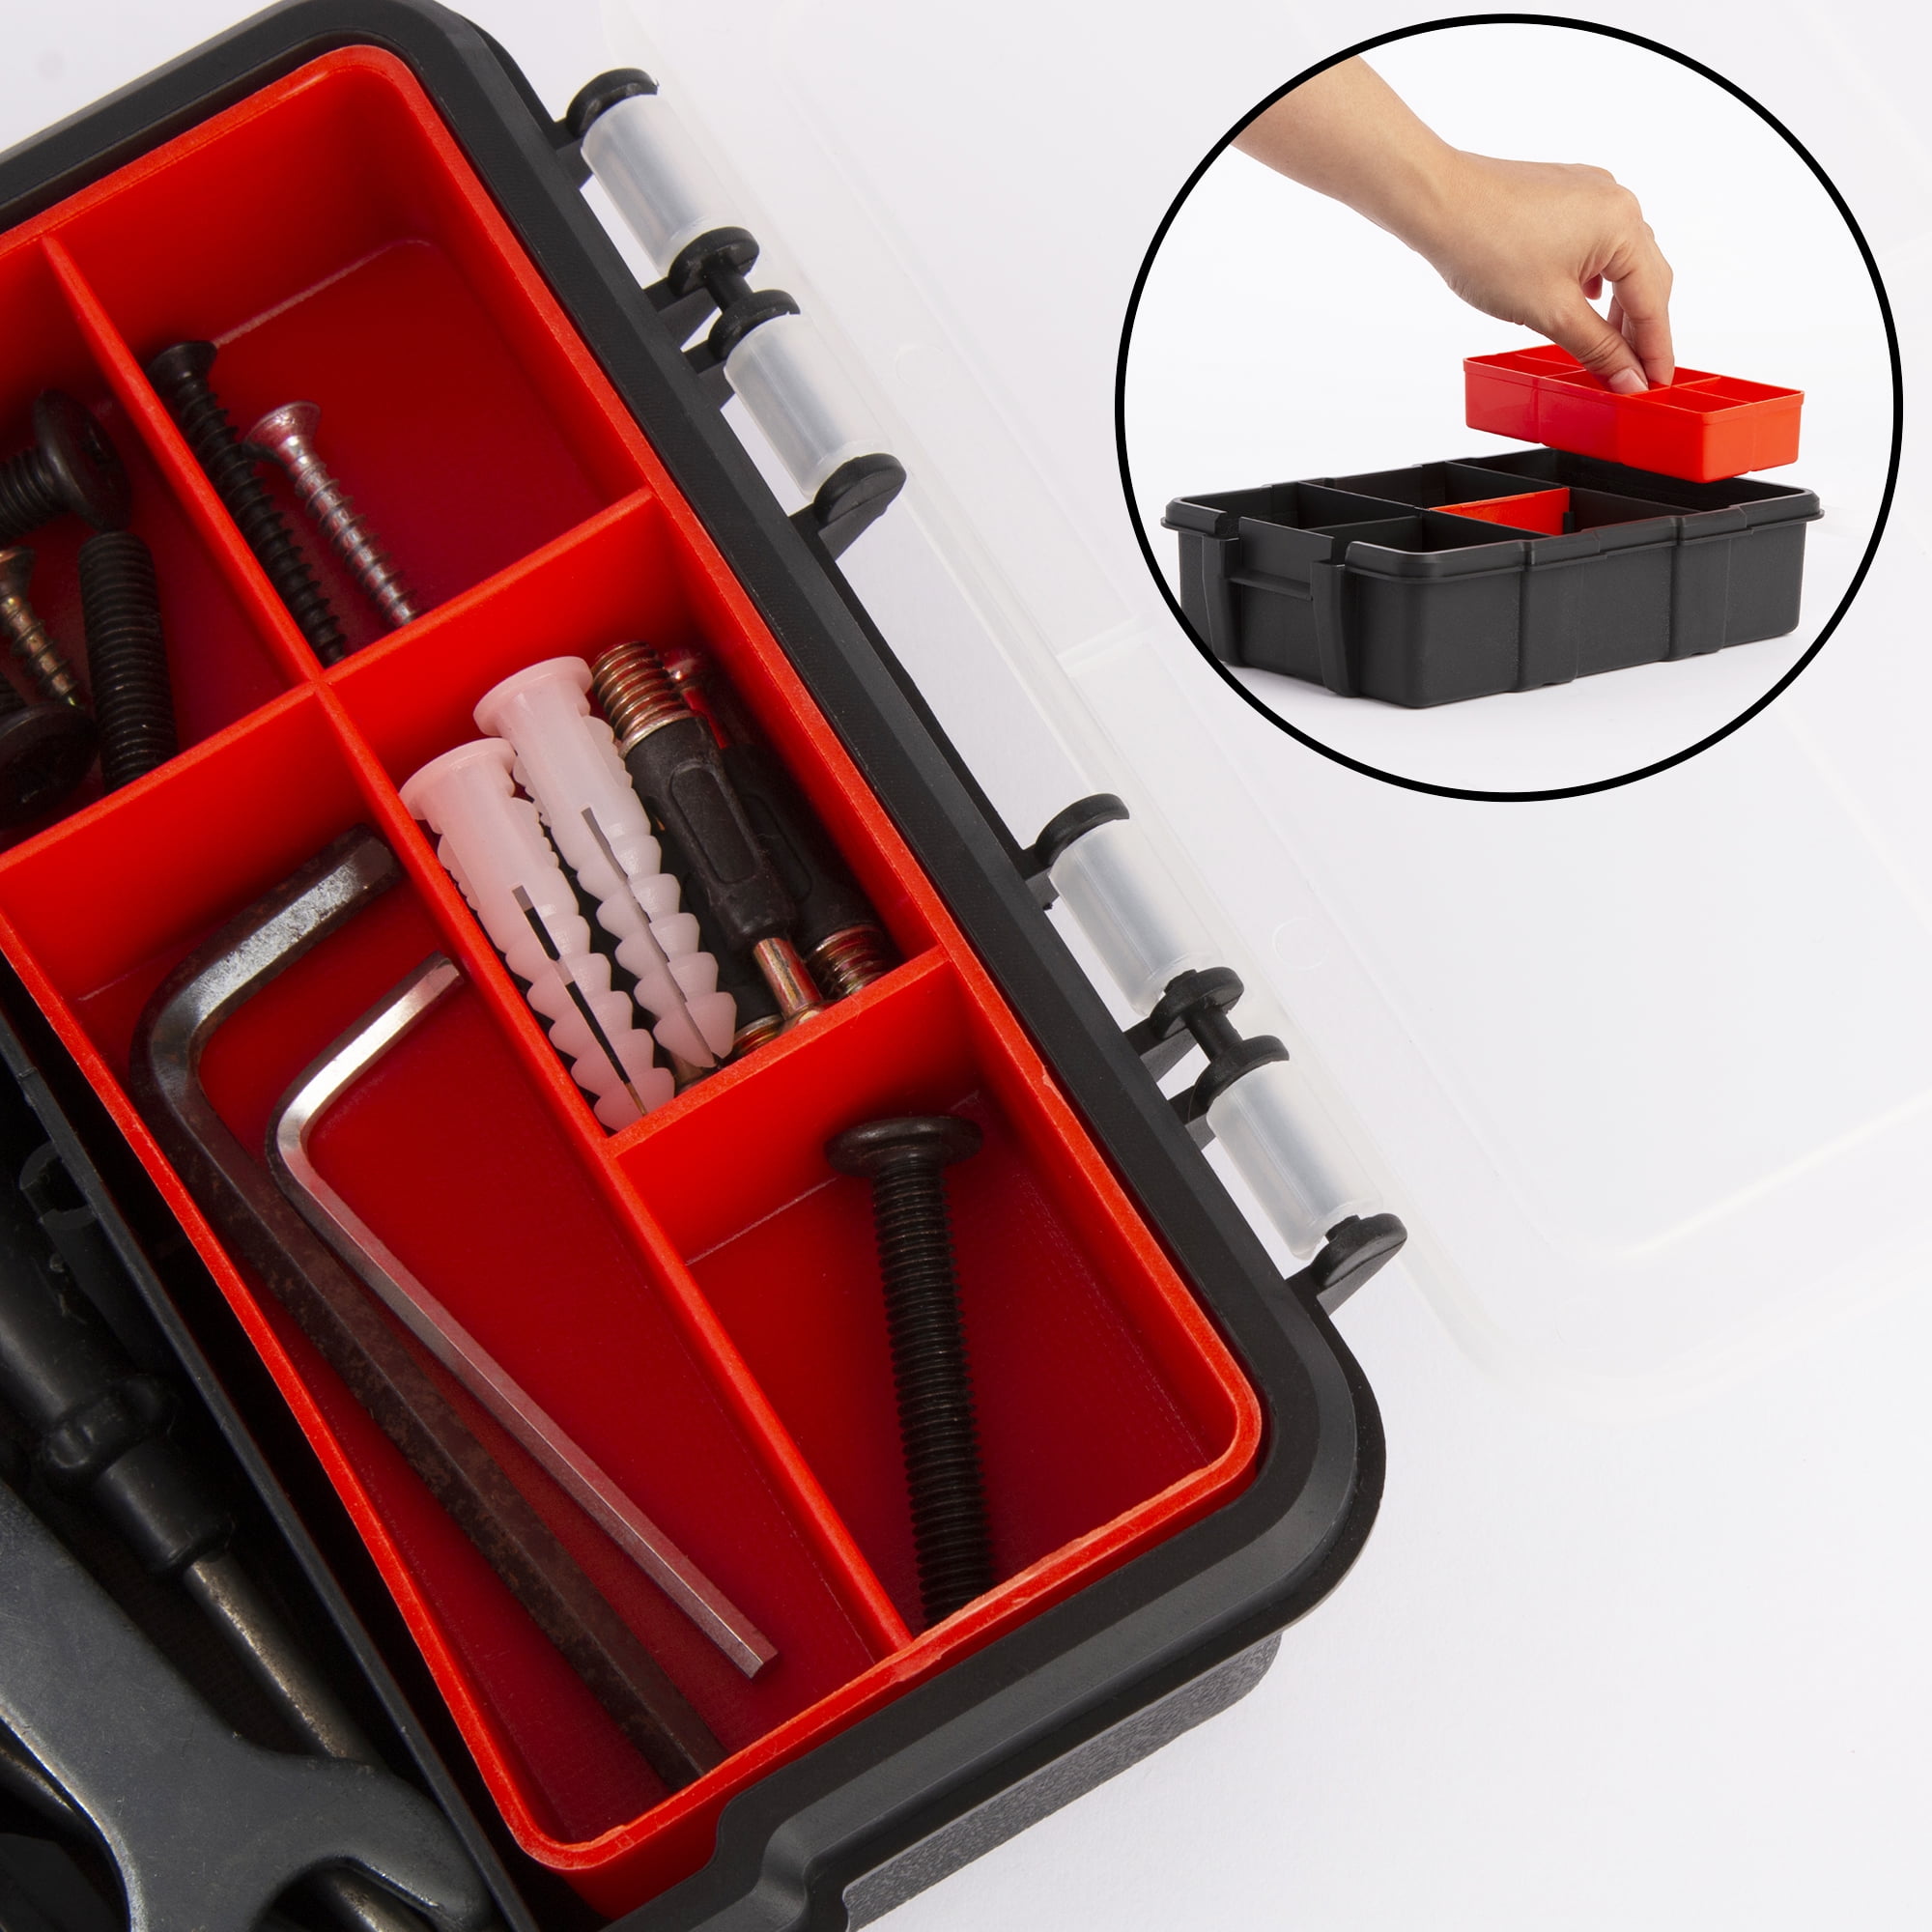 2PCS Tool Box Hardware Storage Organizer, Portable Small Part Case